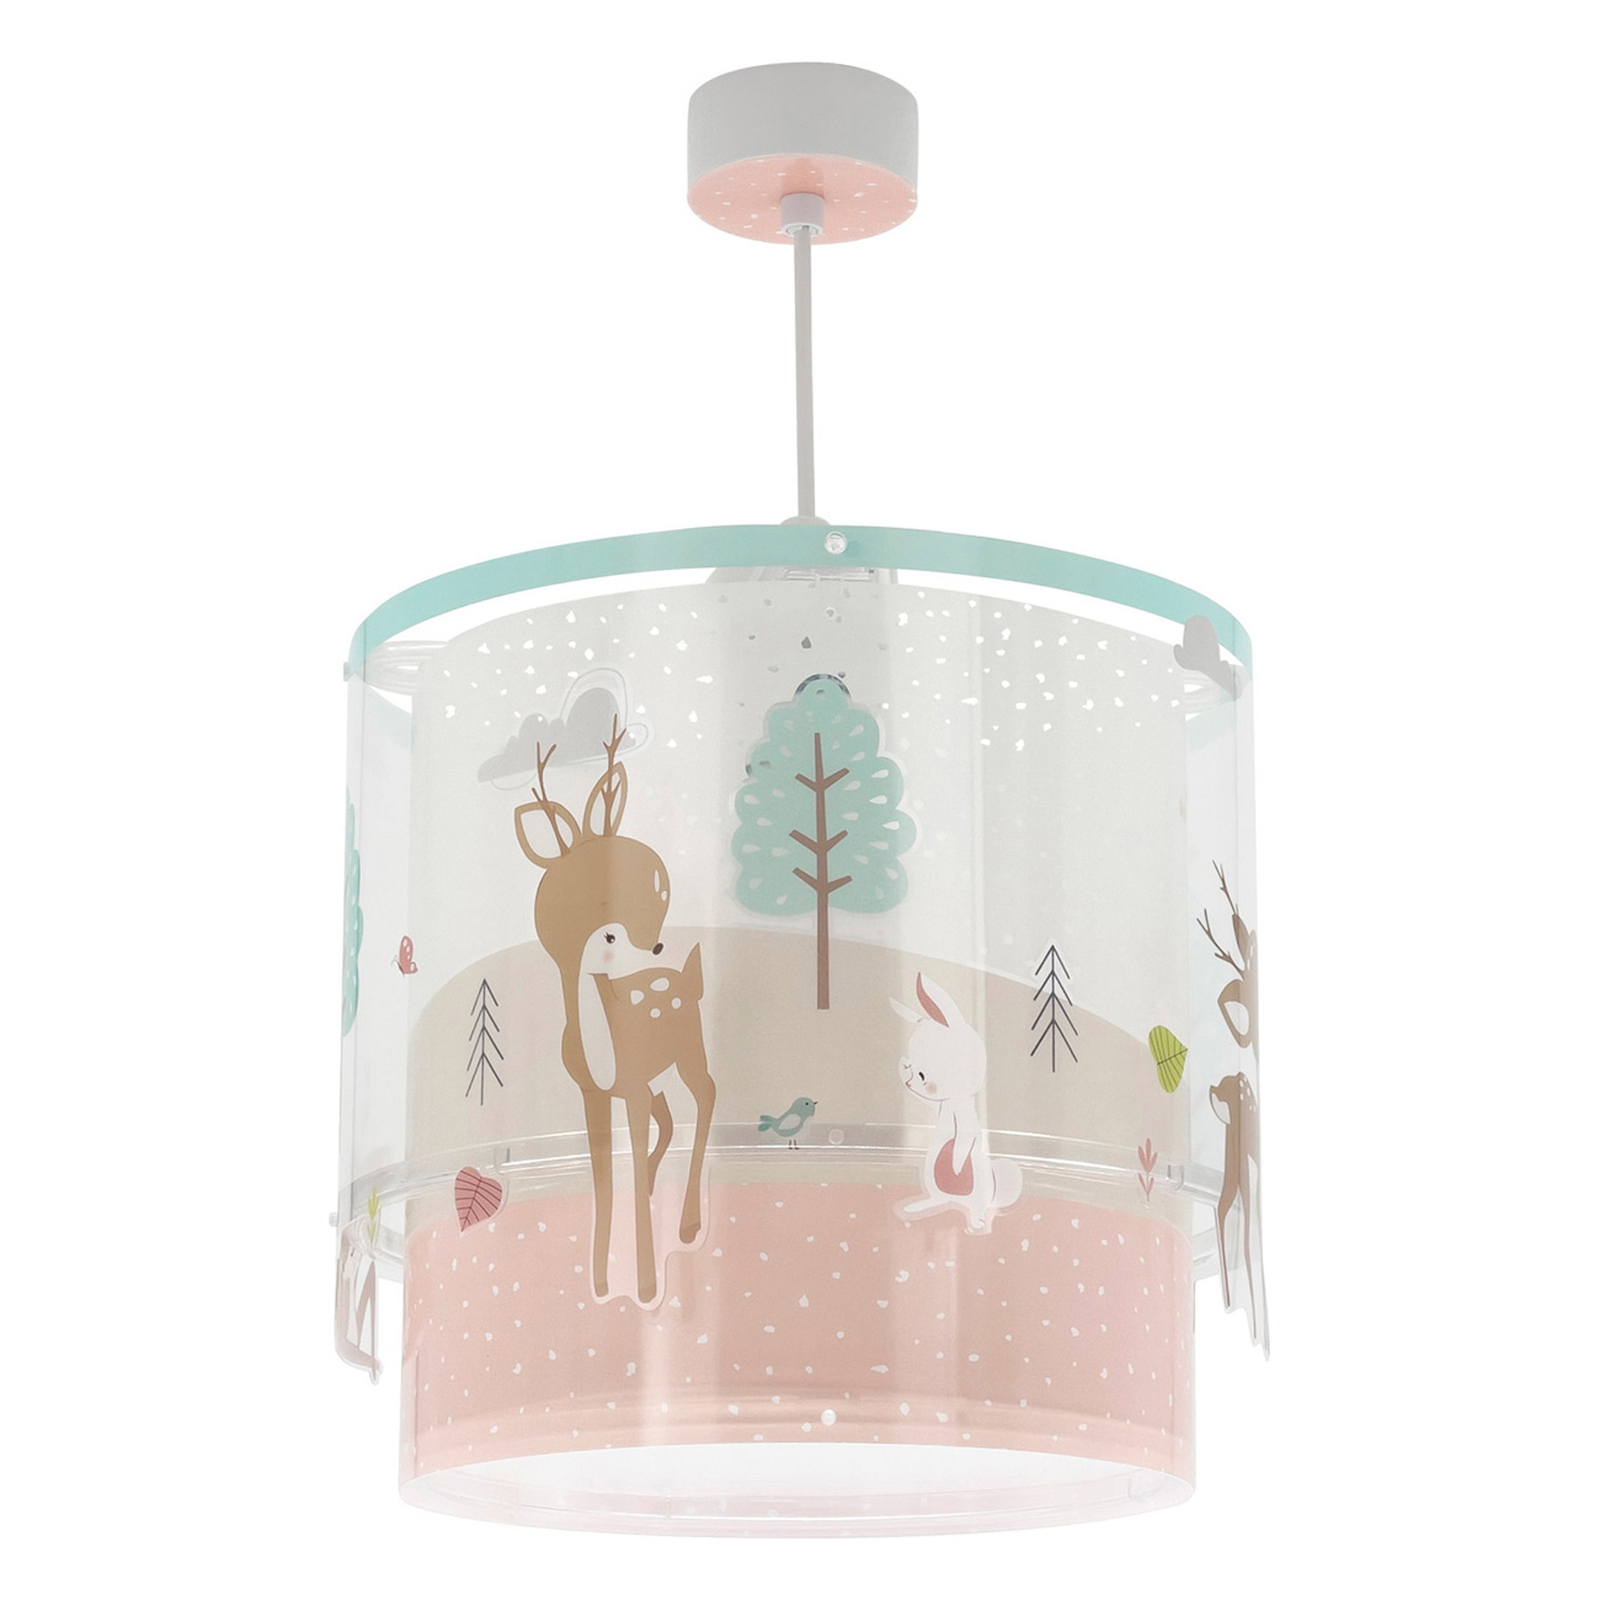 Dalber children's hanging light Loving Deer, deer motif